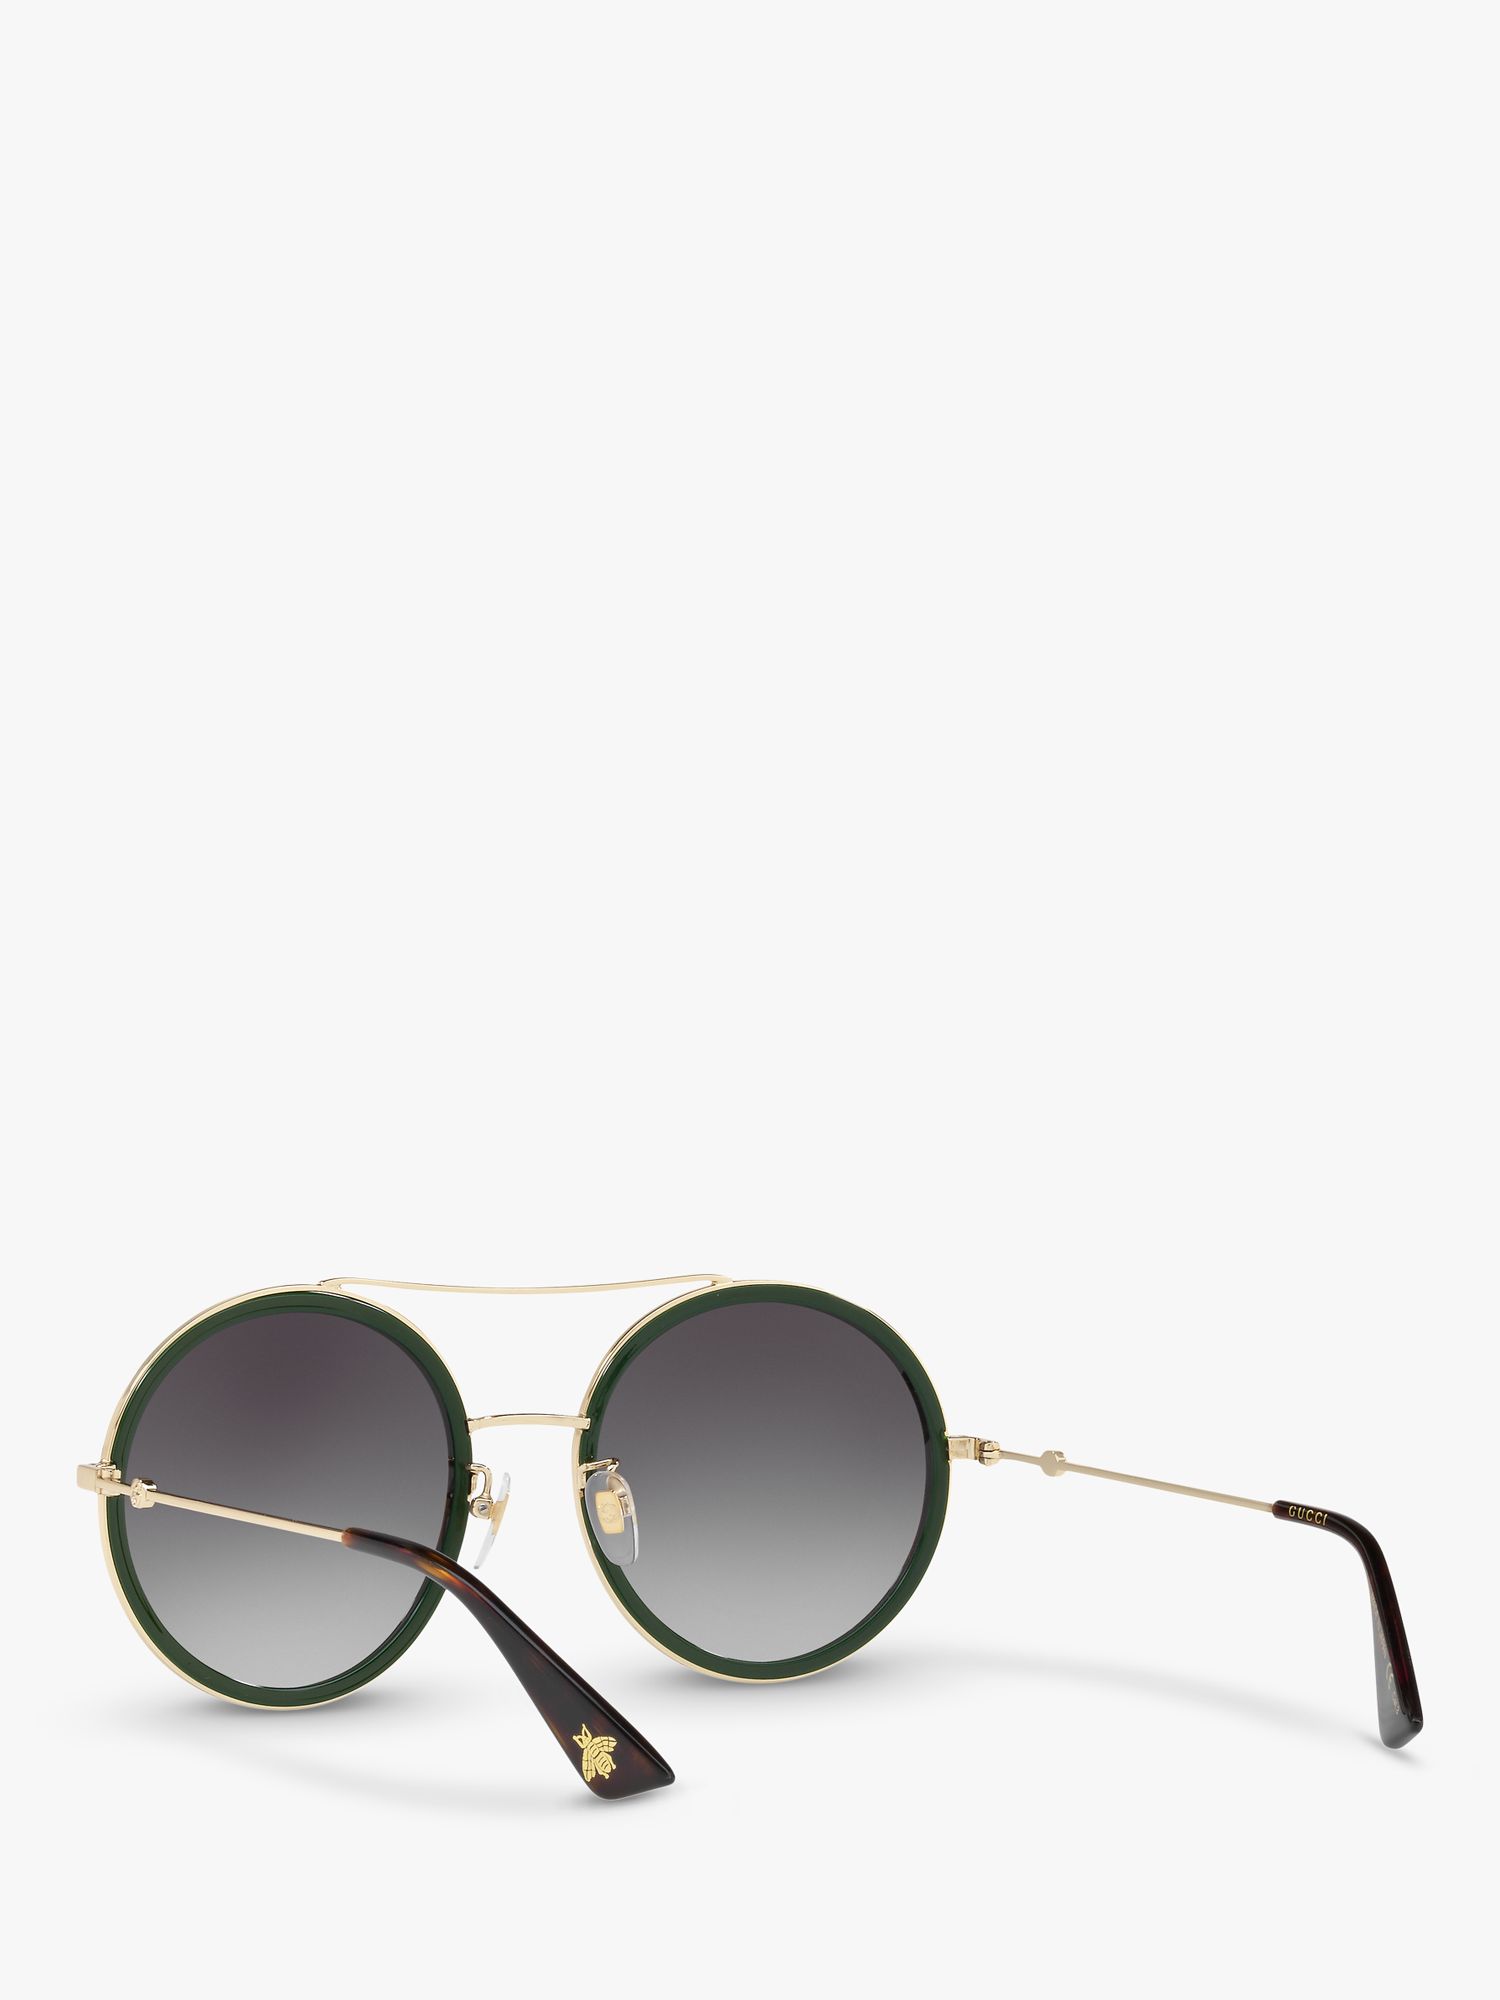 Gucci GG0061S Women's Polarised Round Sunglasses, Gold/Grey Gradient